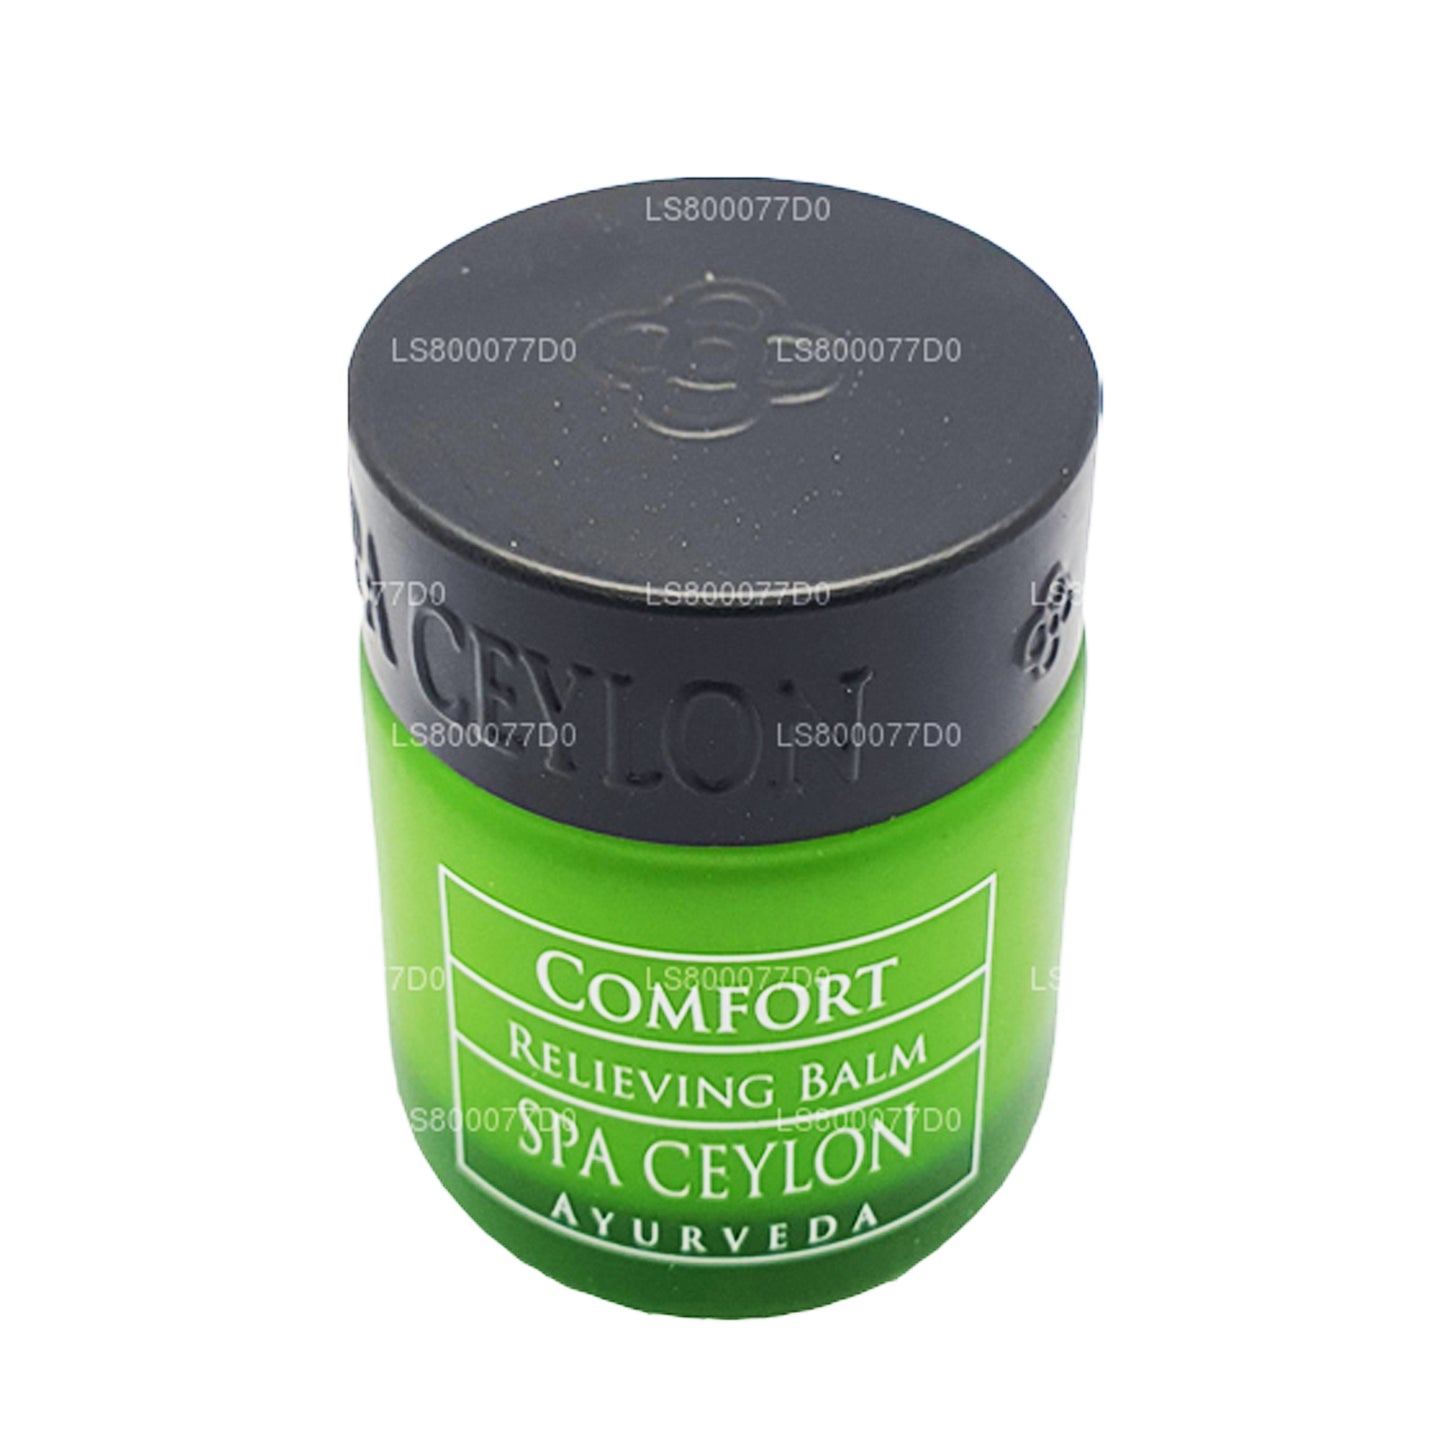 Spa Ceylon Comfort Relieving Balm (25g)